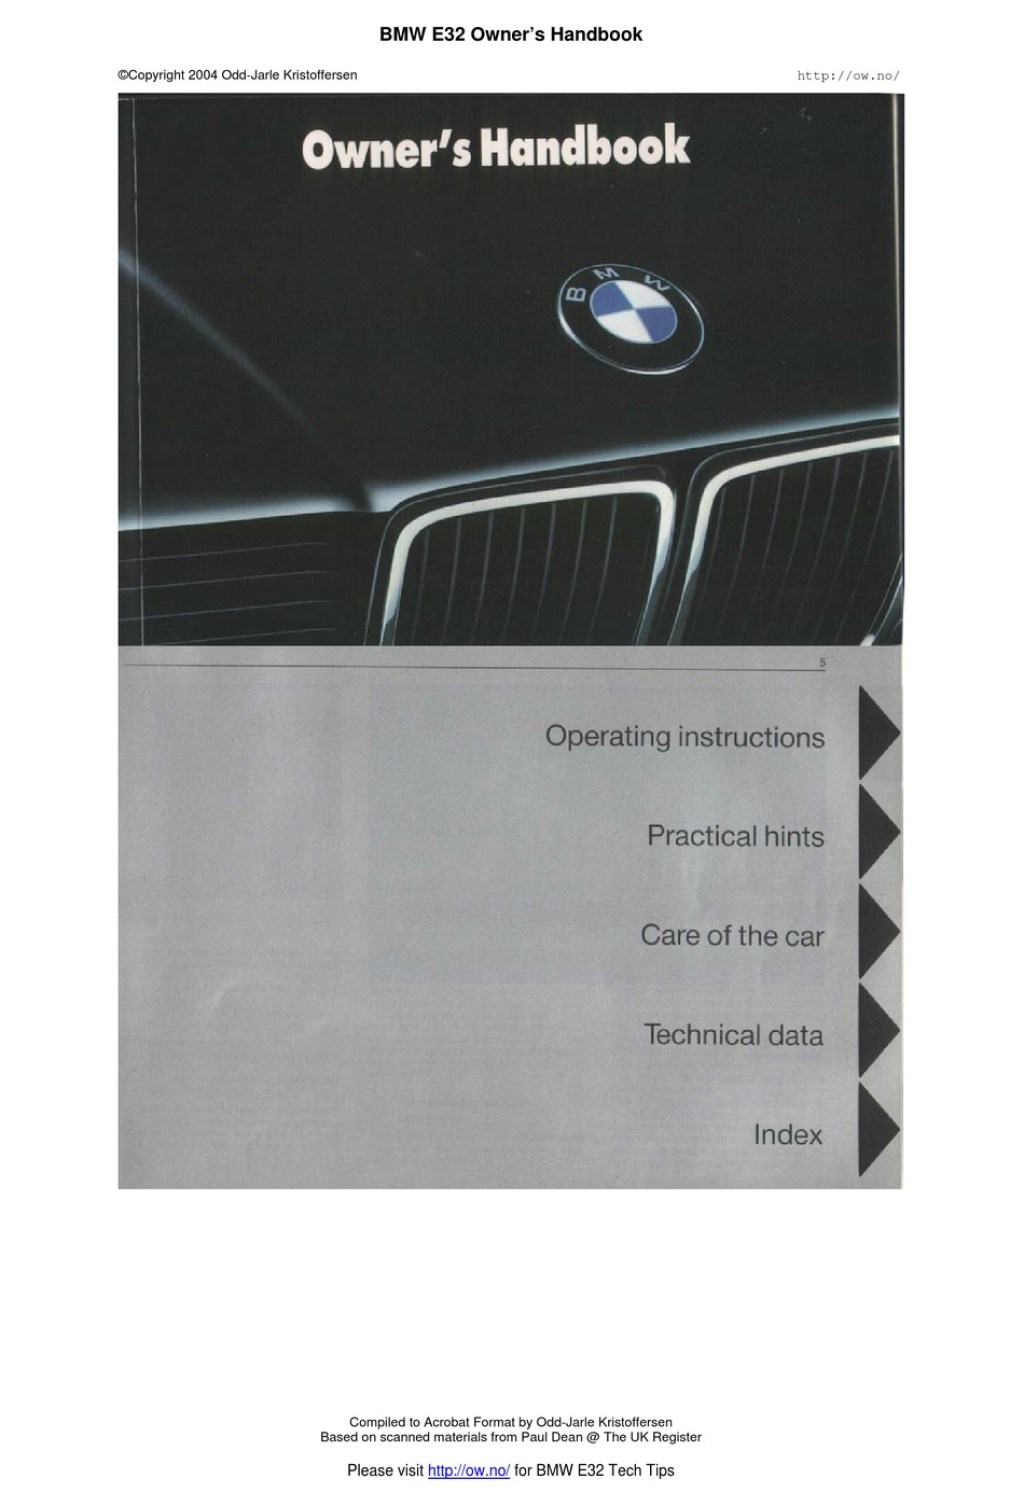 Picture of: BMW E OWNER’S HANDBOOK MANUAL Pdf Download  ManualsLib